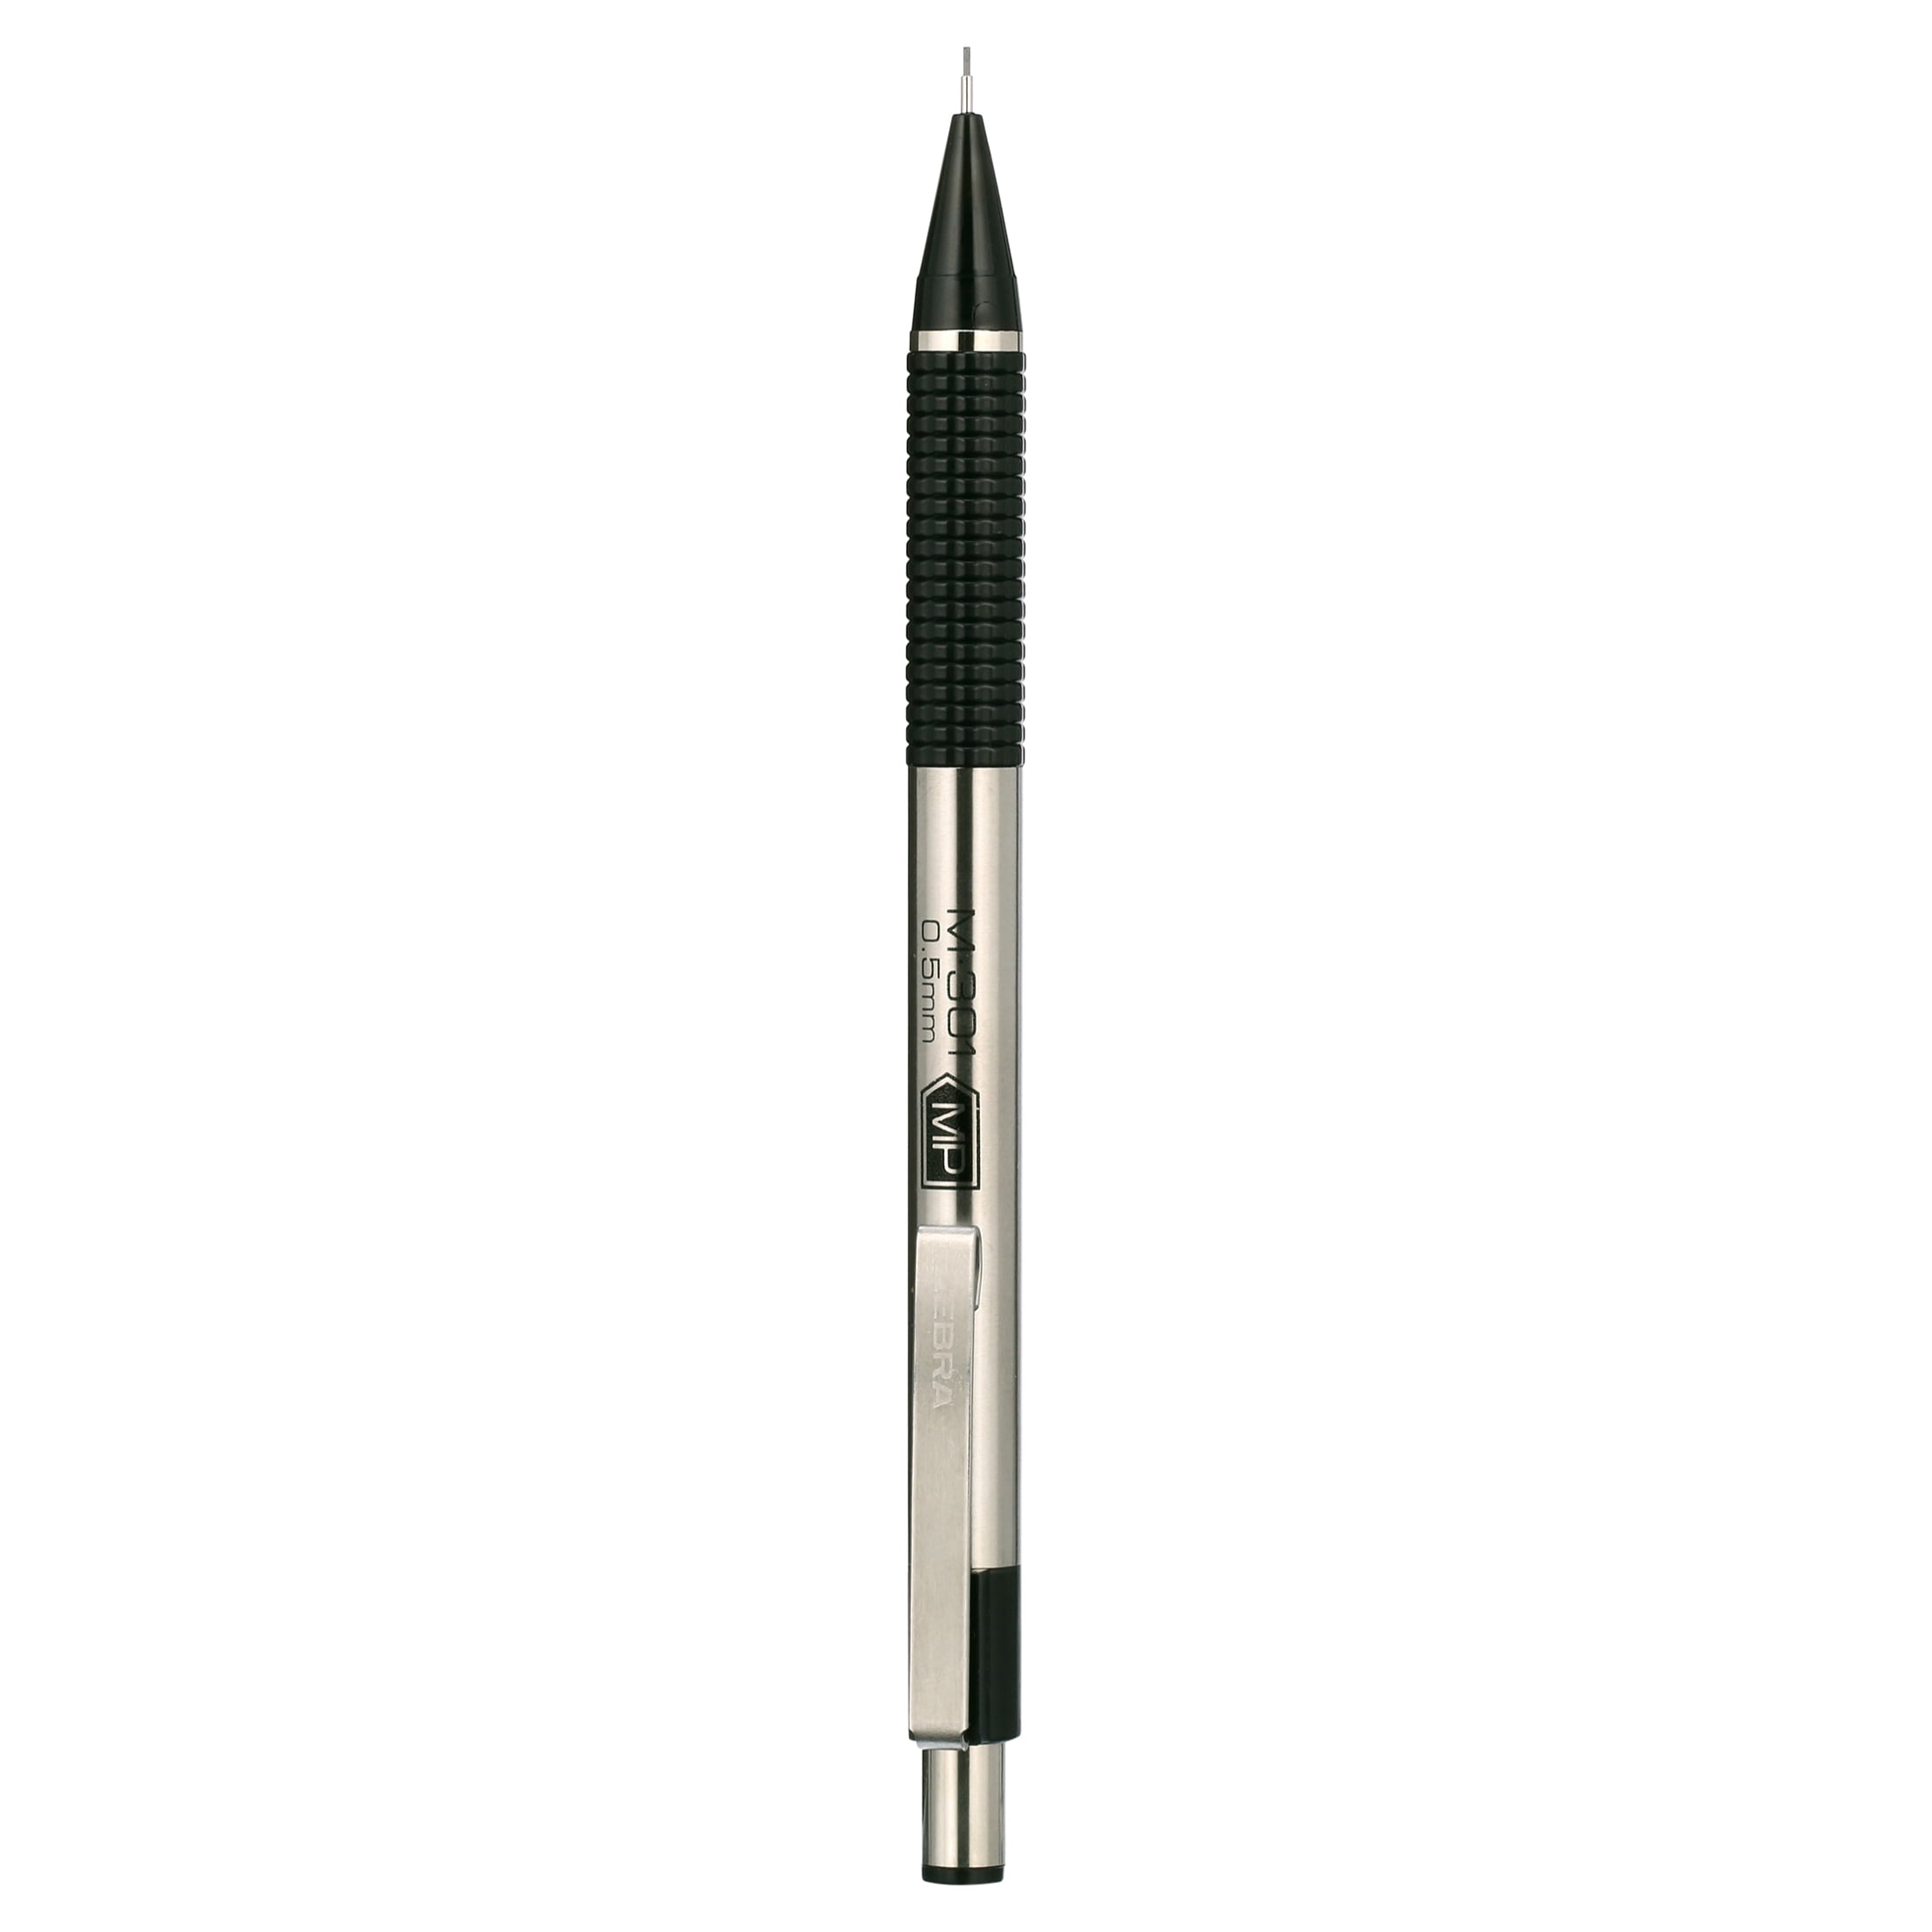 Zebra M-301 Mechanical Pencils No. 2 Medium Lead 2/Pack (54012) 399584